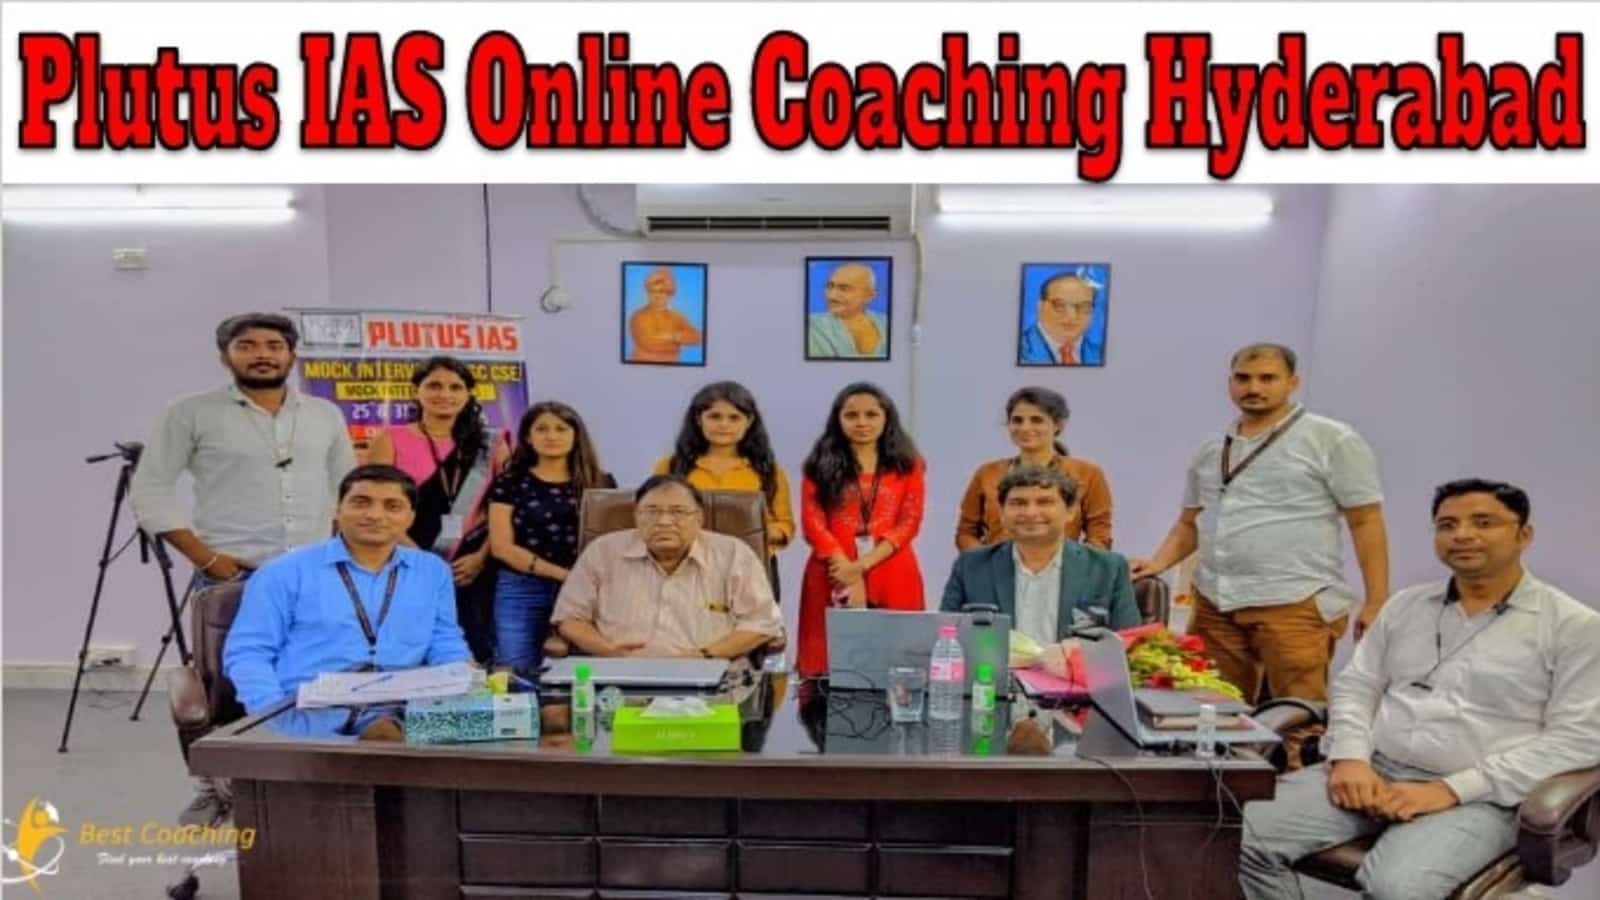 Plutus IAS Online Coaching Hyderabad